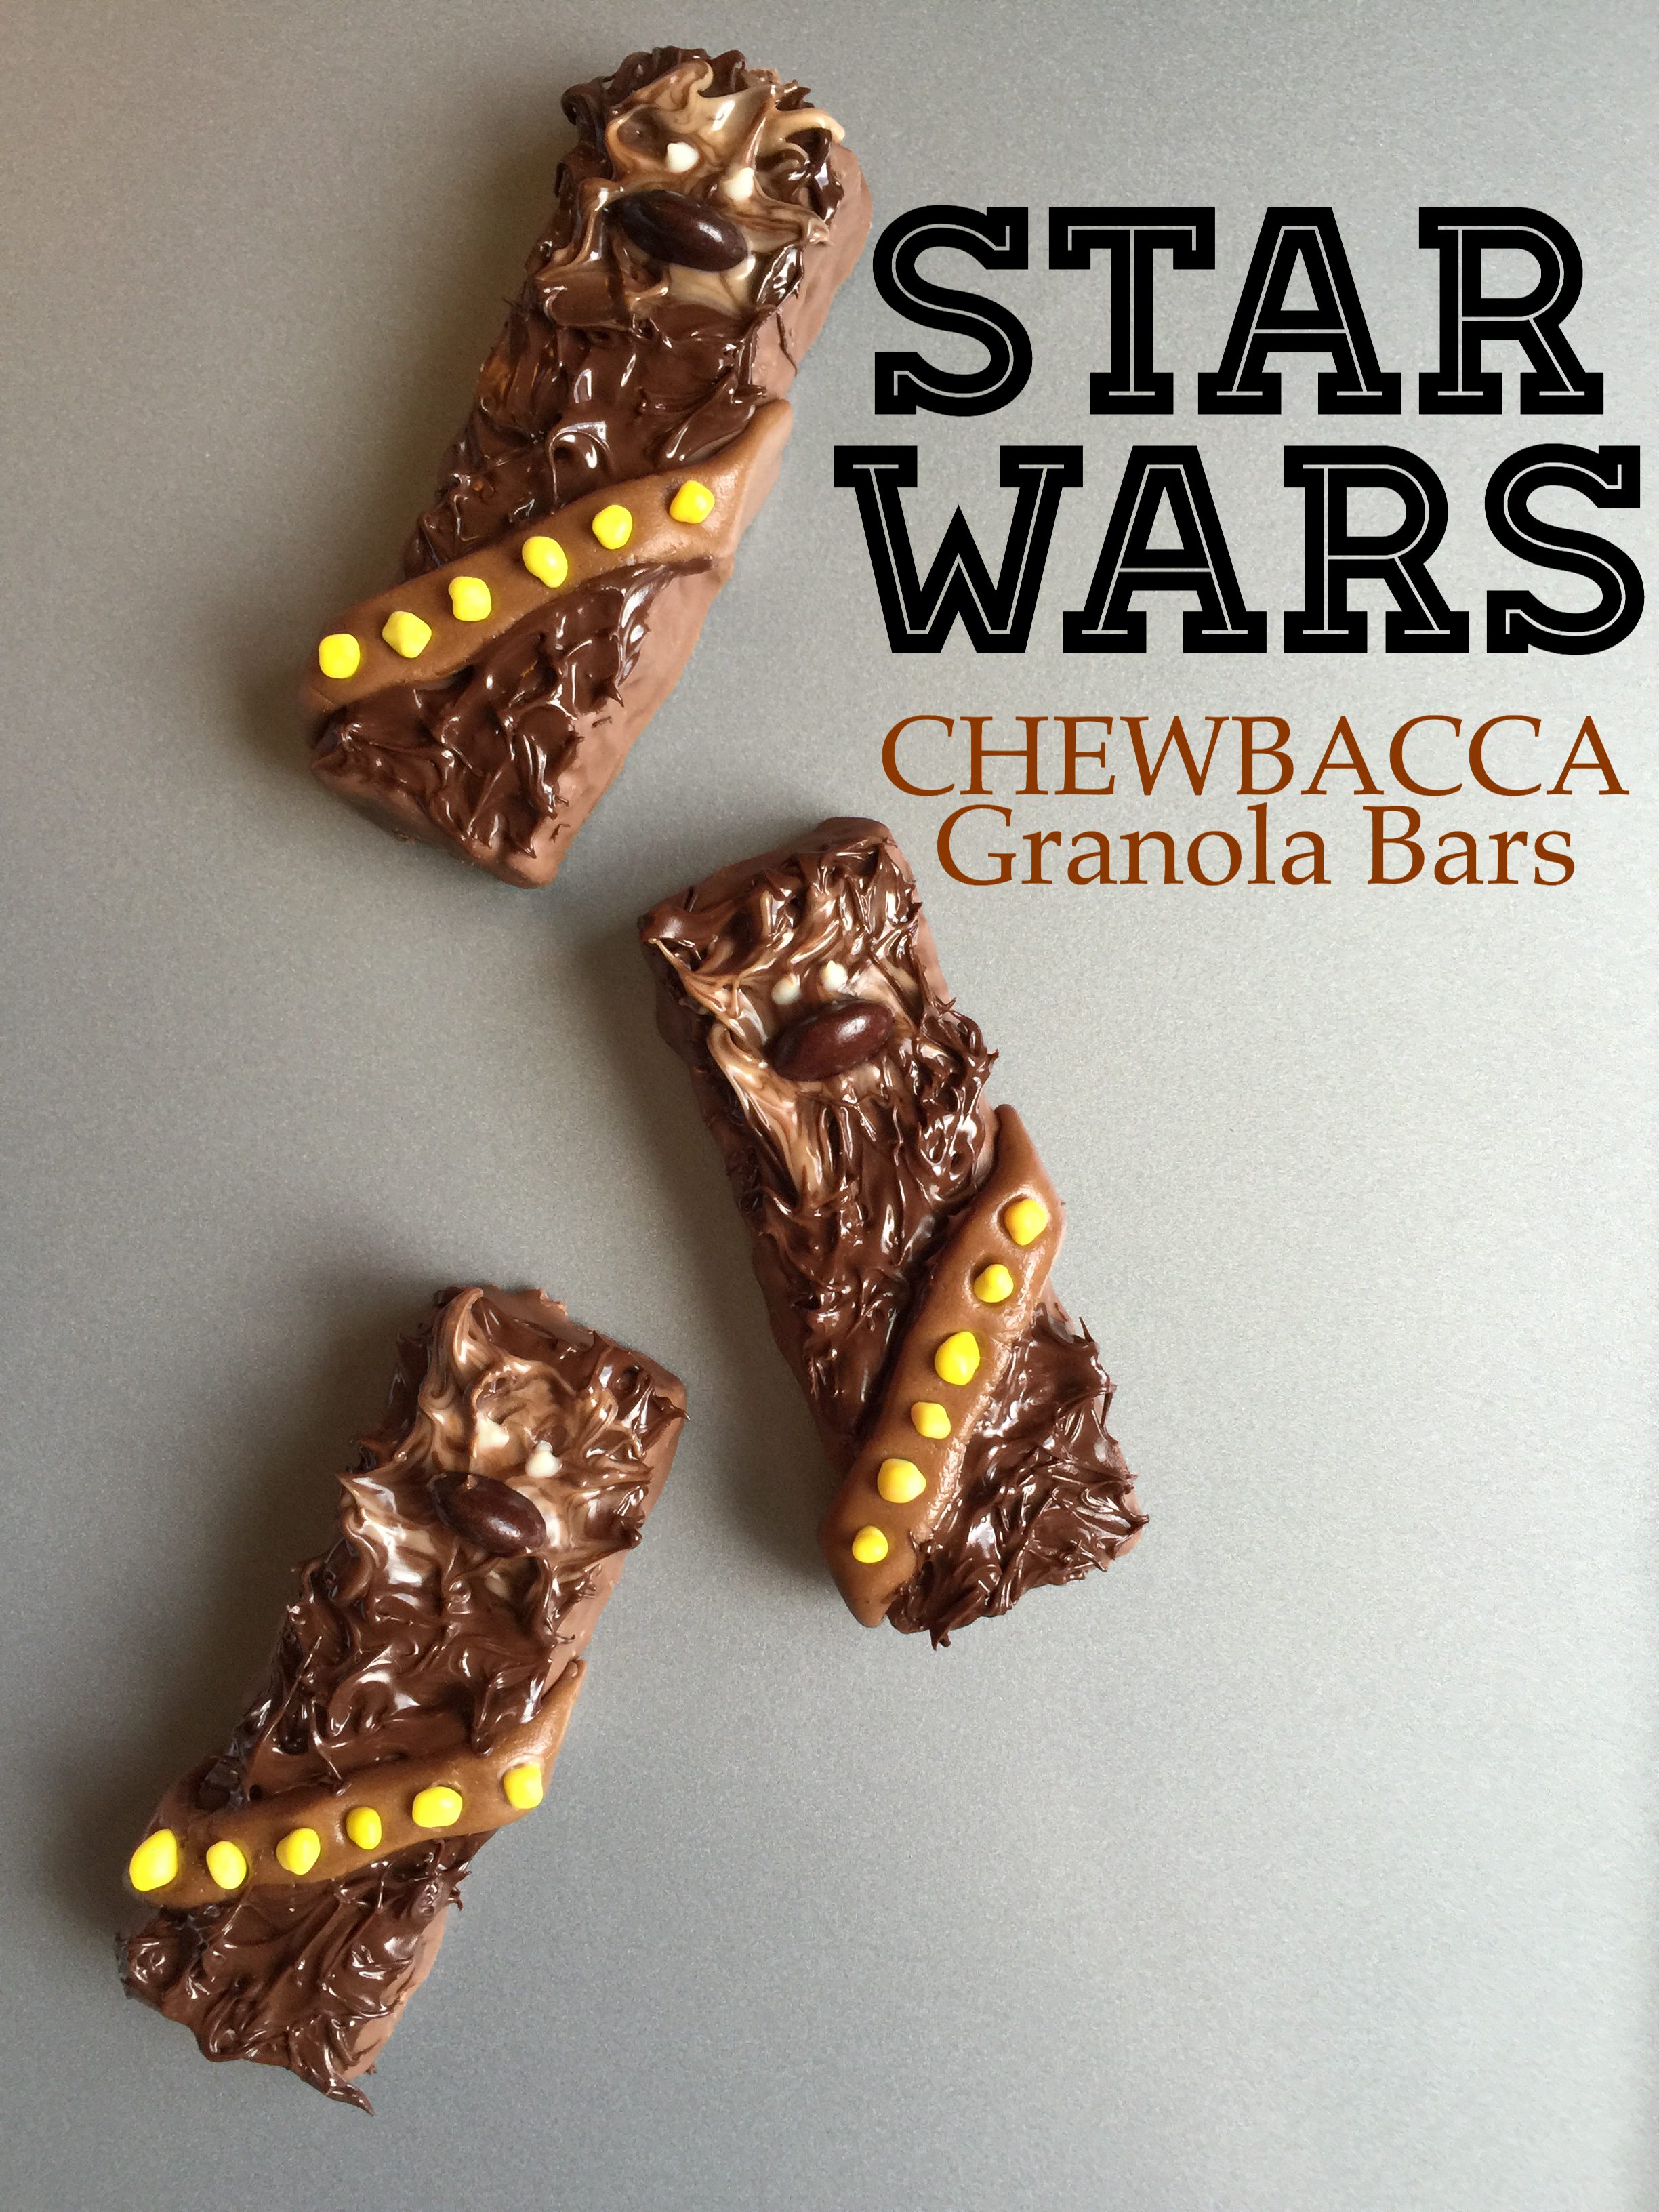 Chewbacca Granola Bars Recipe – A Fun Star Wars Treat